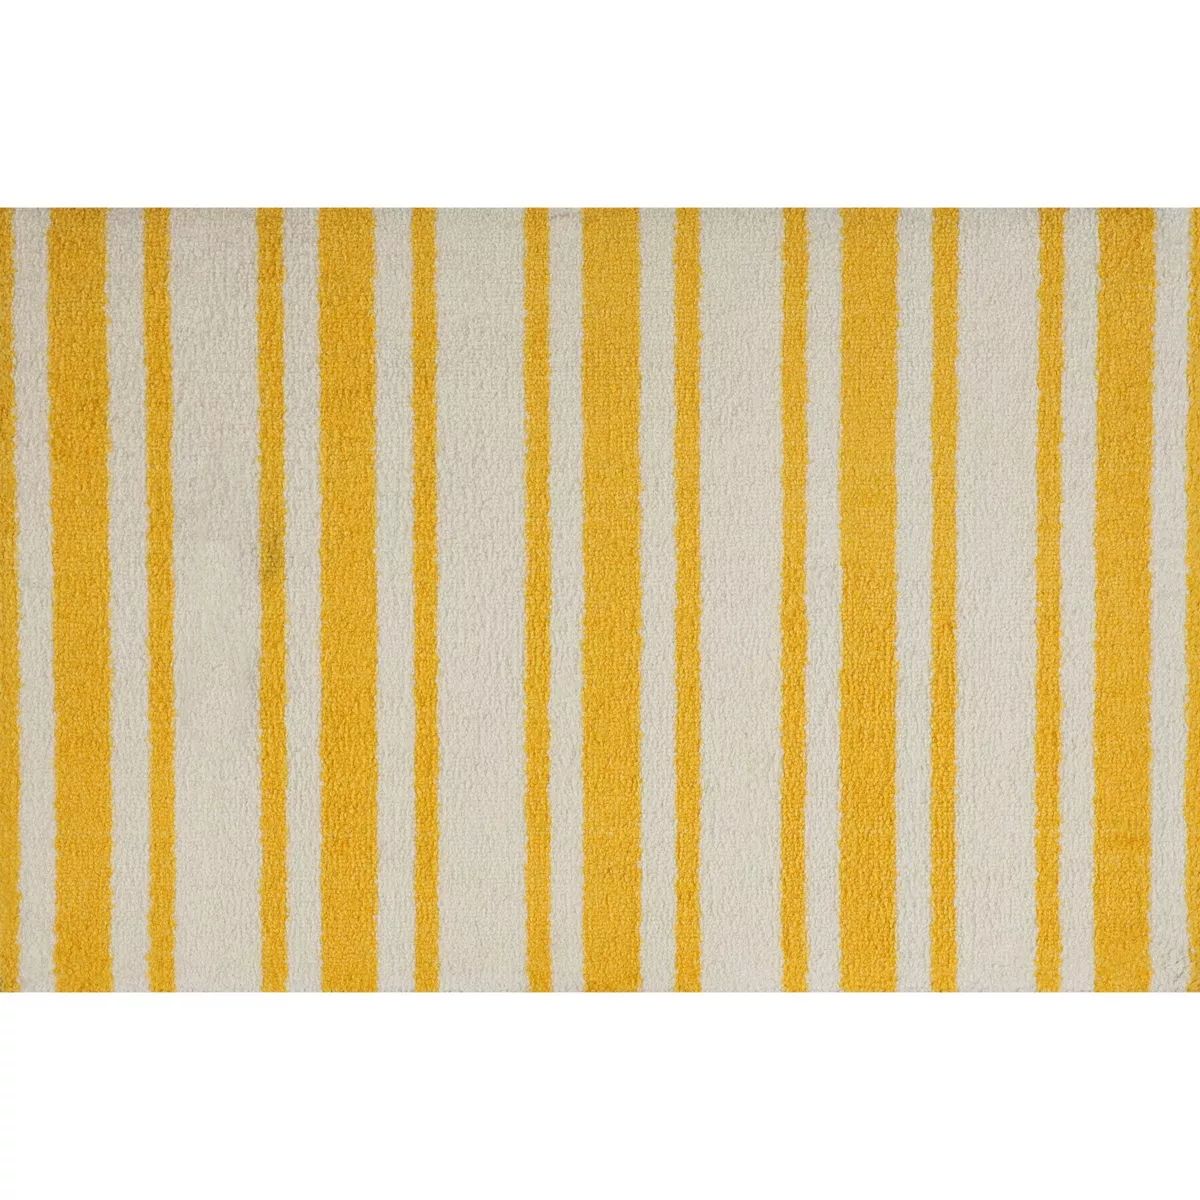 2'x3' ColorStar Timeless Stripe Door Mat Yellow - Bungalow Flooring | Target